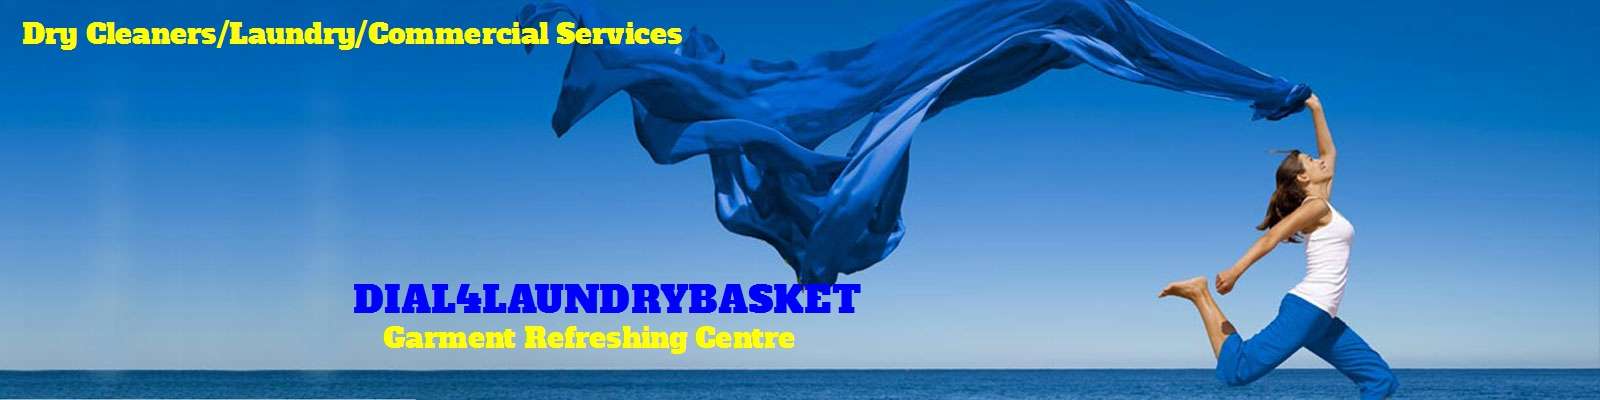 Dial 4 Laundry Basket Pvt Ltd